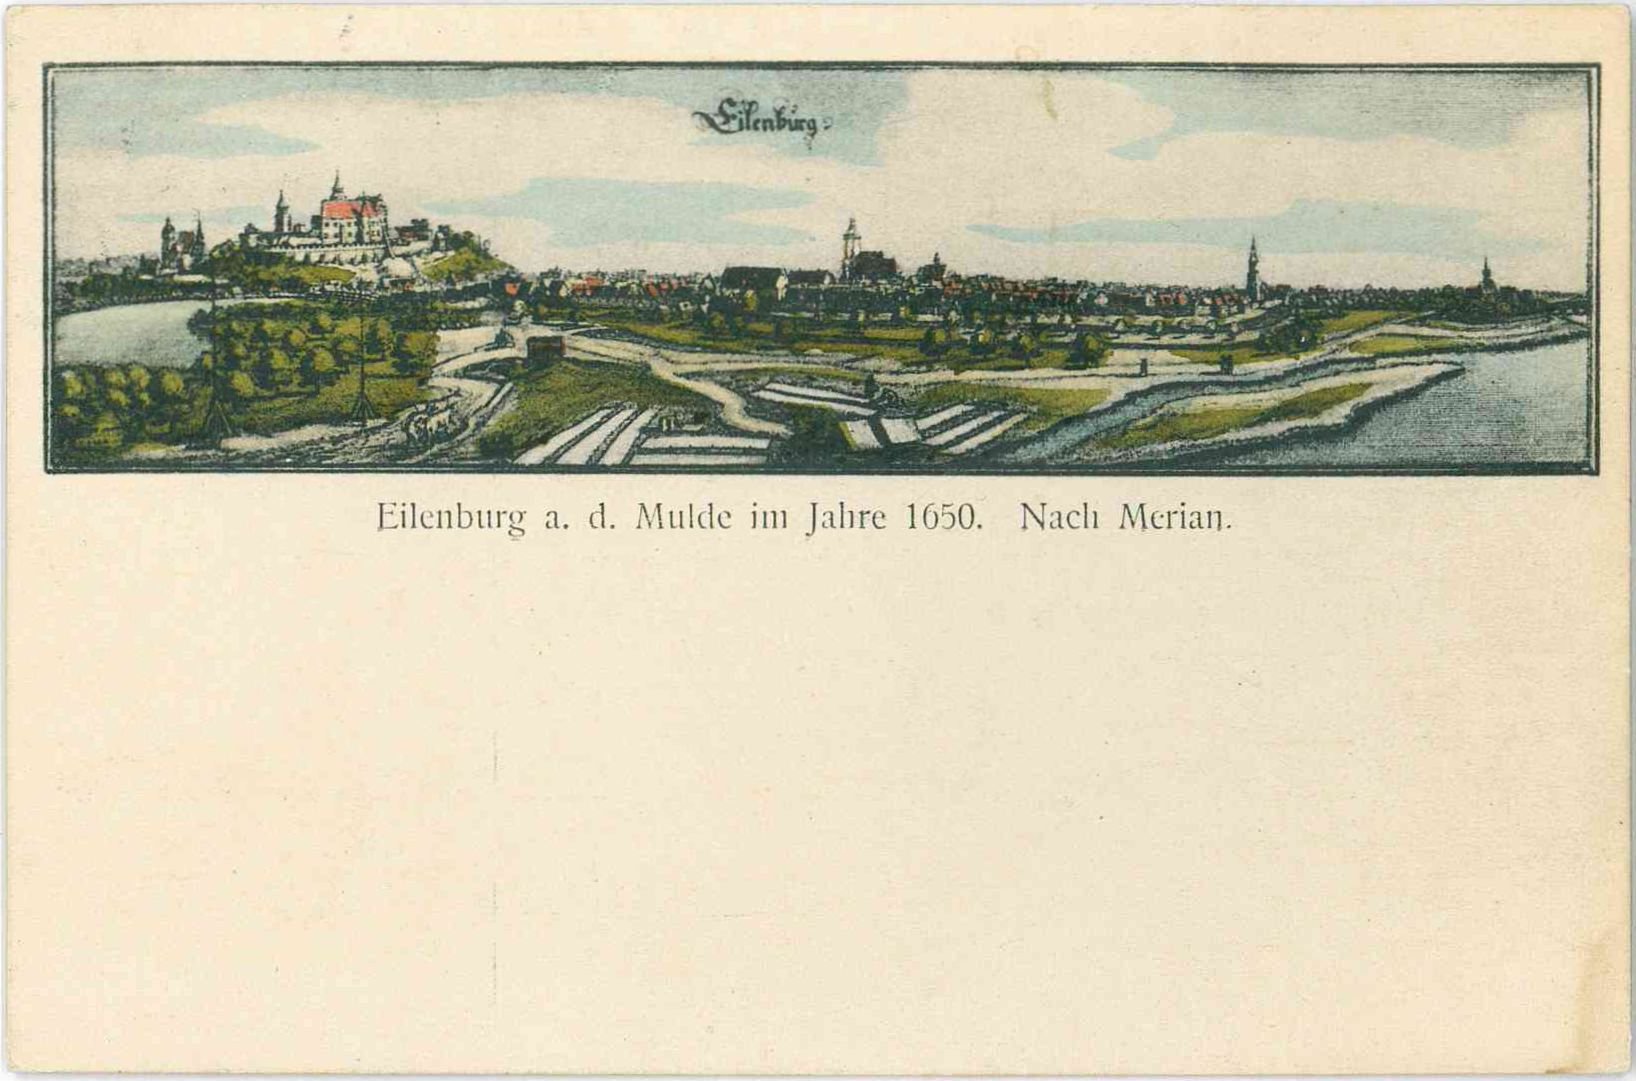 Eilenburg a. d. Mulde im Jahr 1650. Nach Merian (Stadtmuseum Eilenburg CC BY-NC)